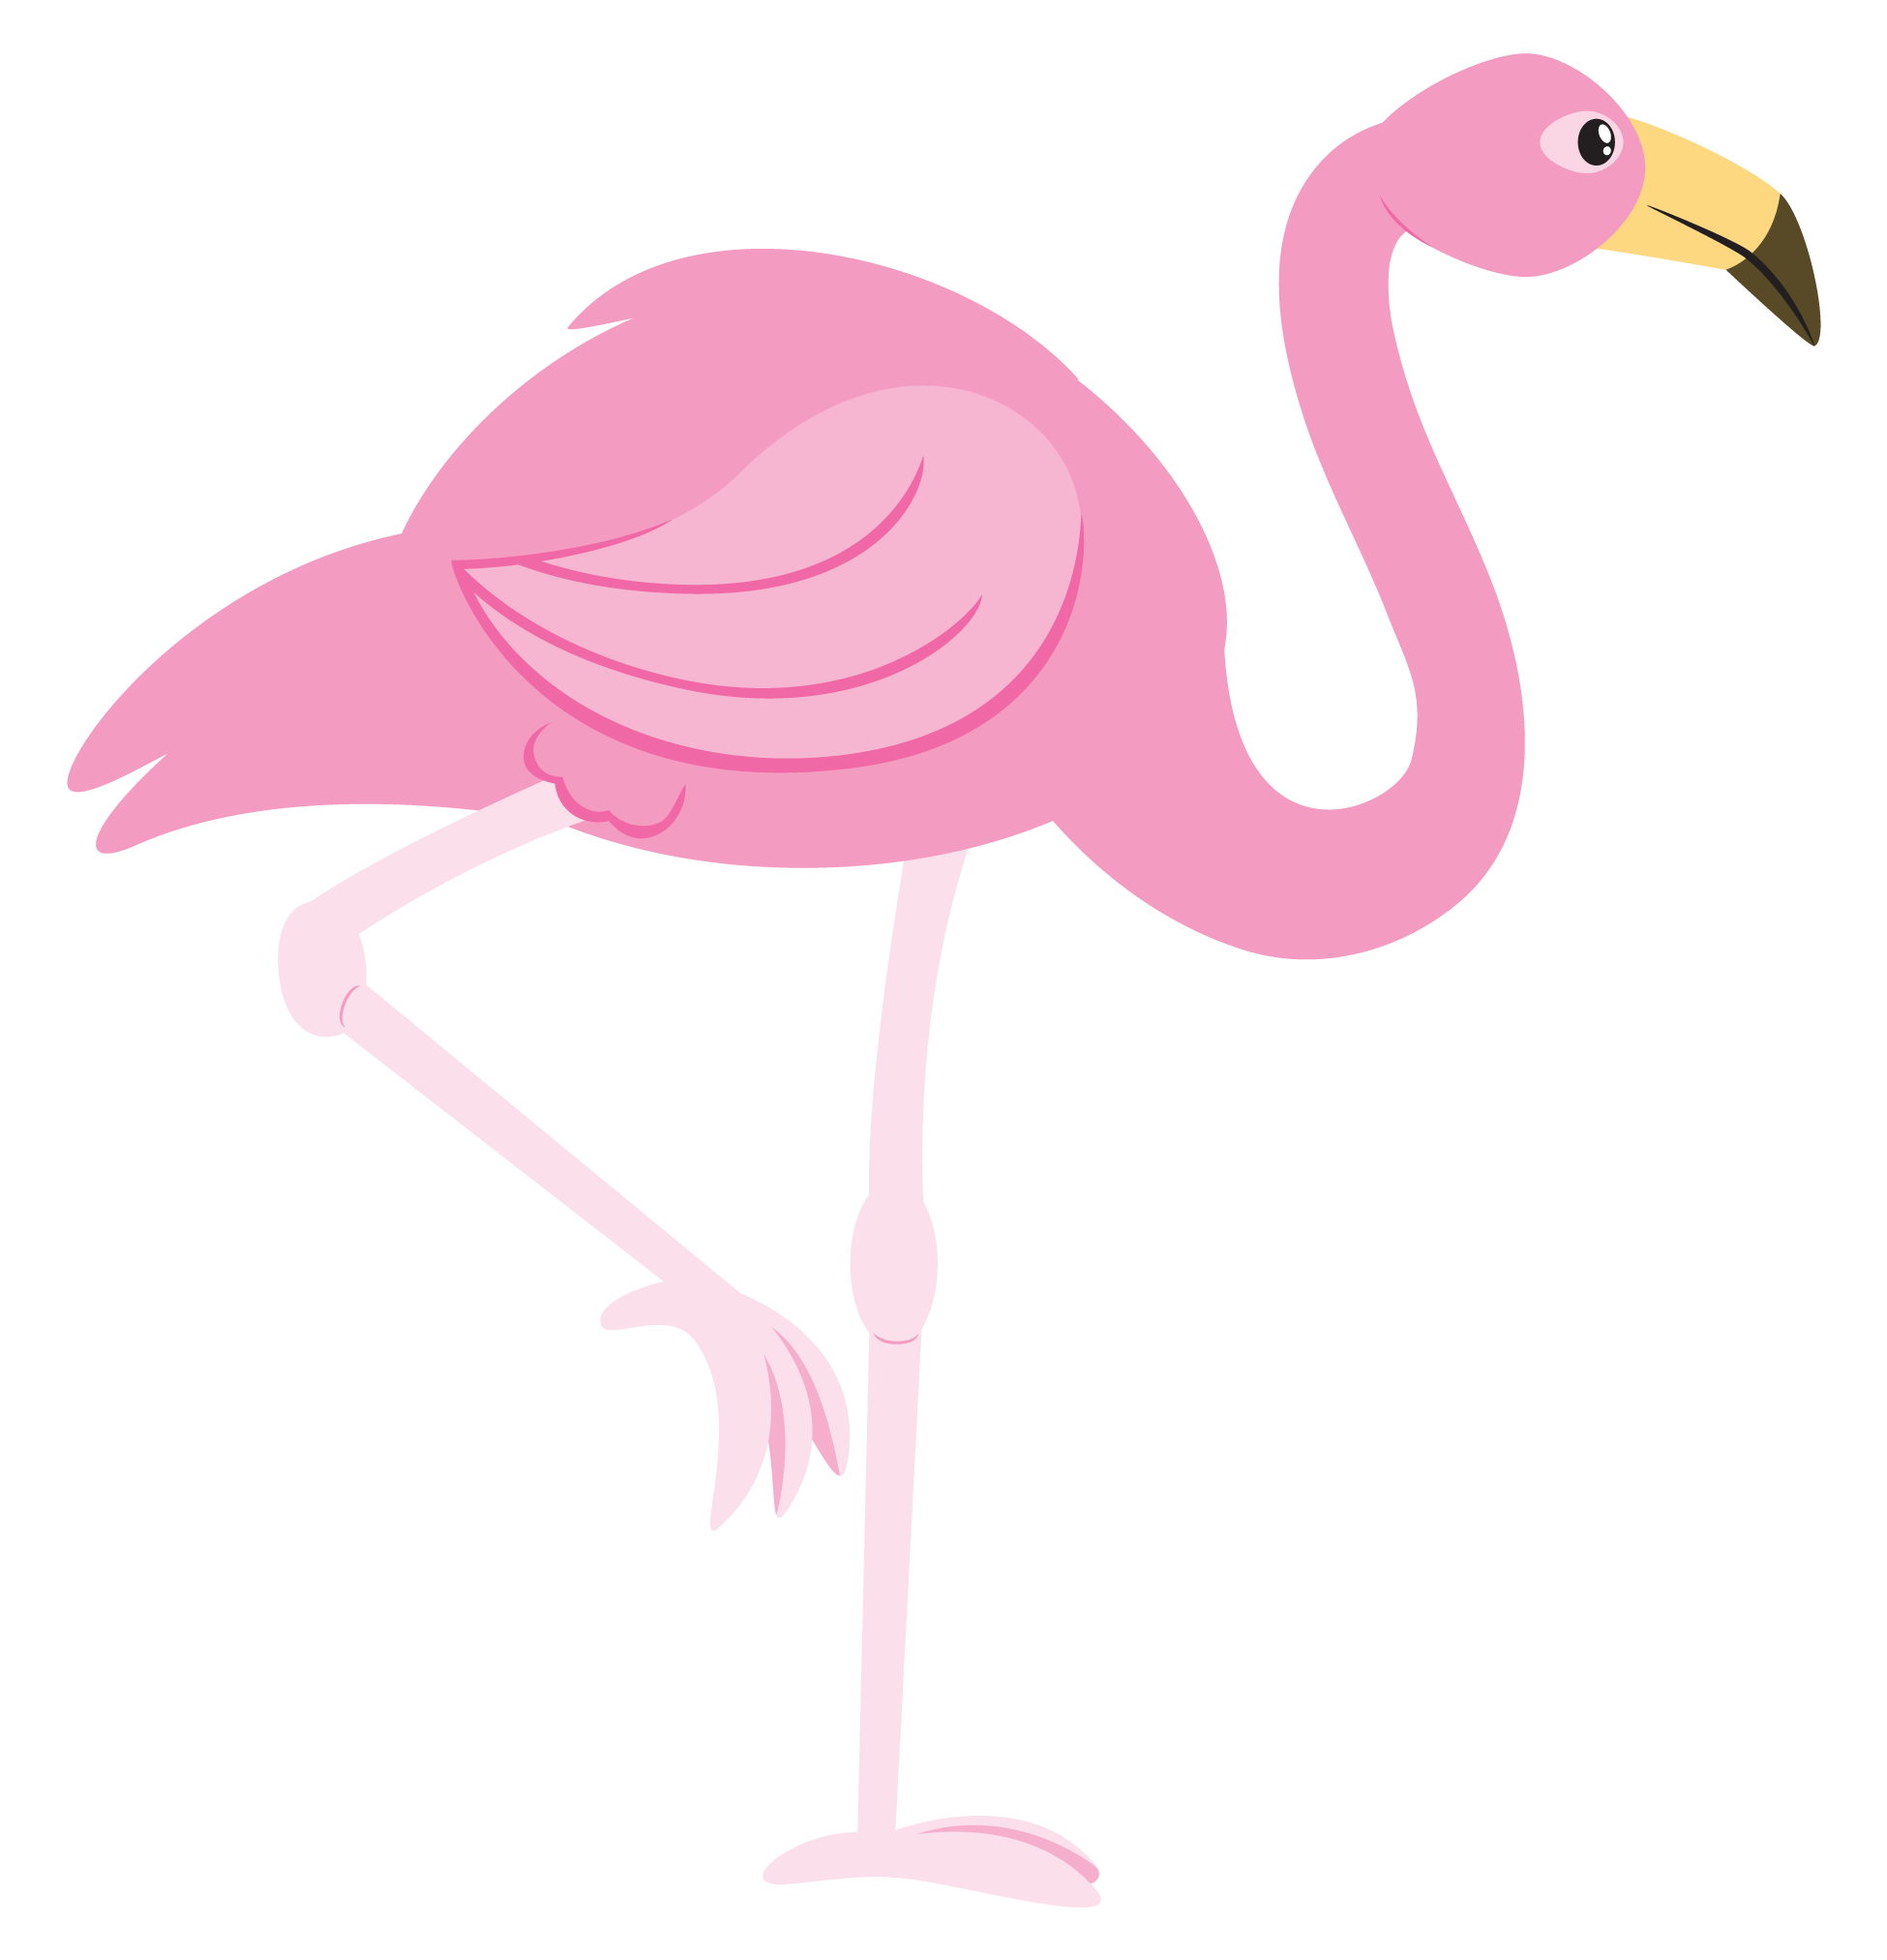 flamingos cartoon